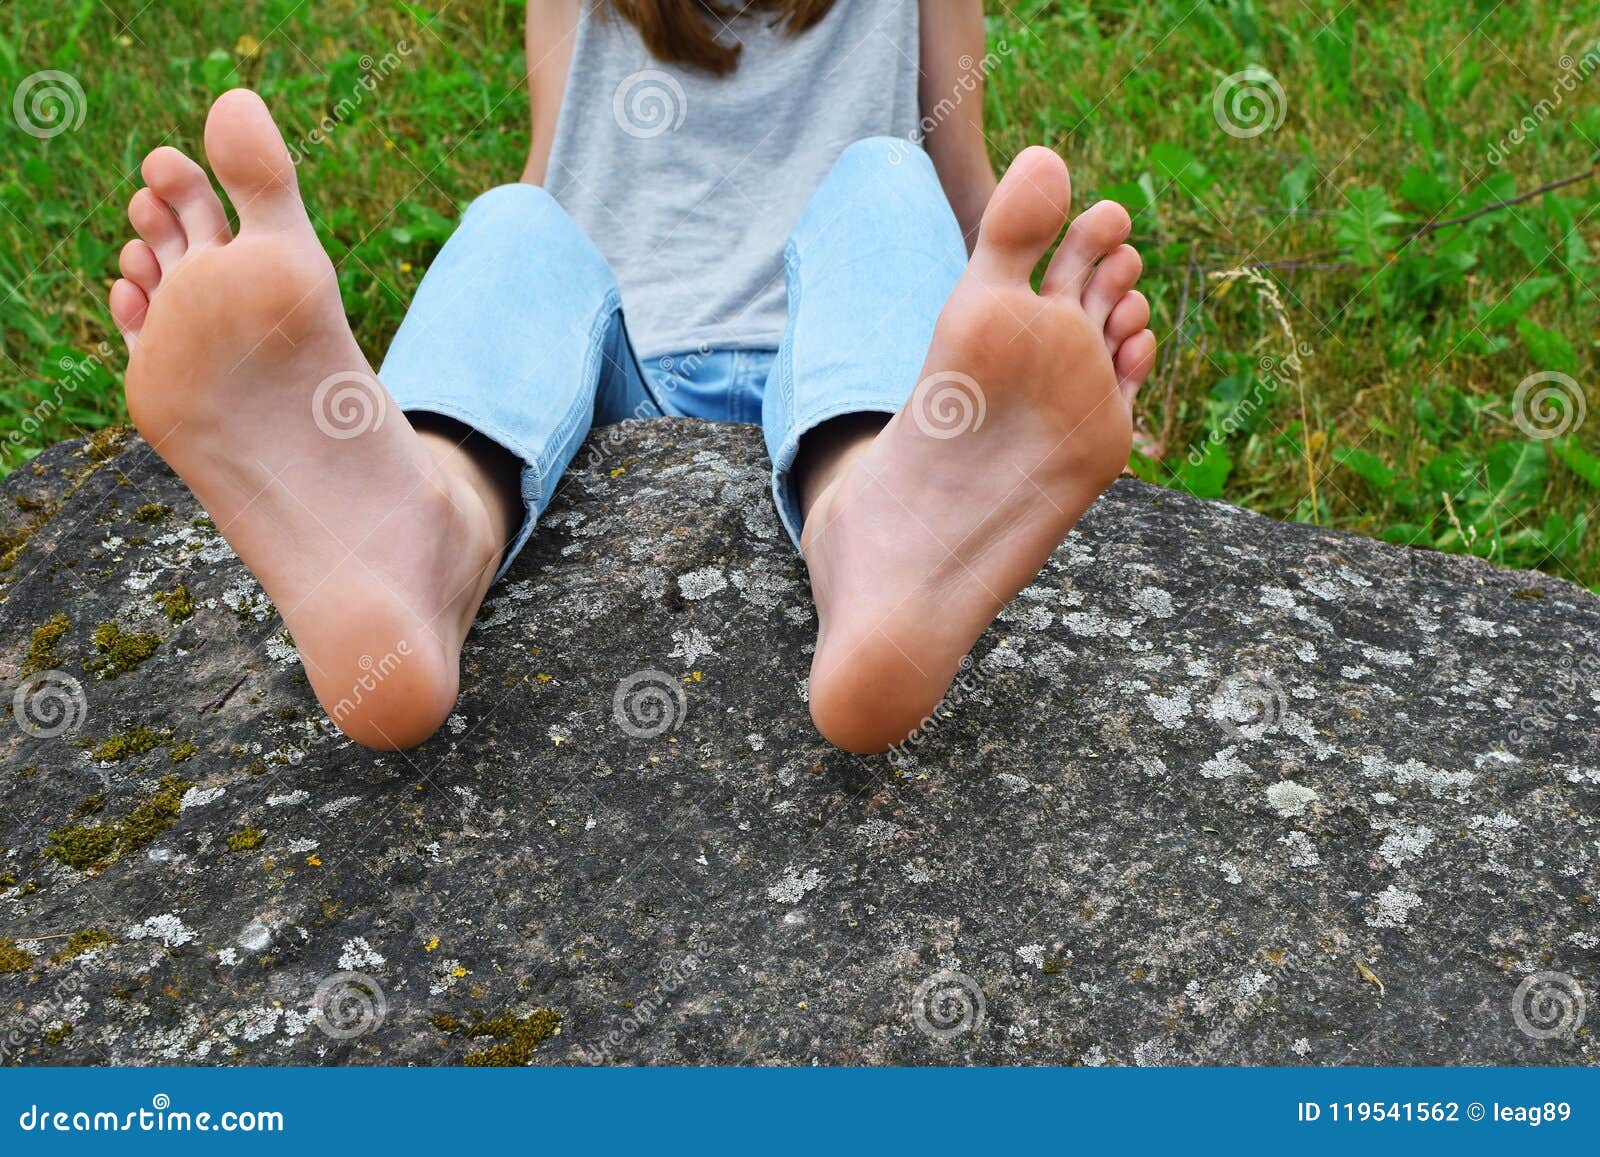 Bare feet of girl on stone stock photo 